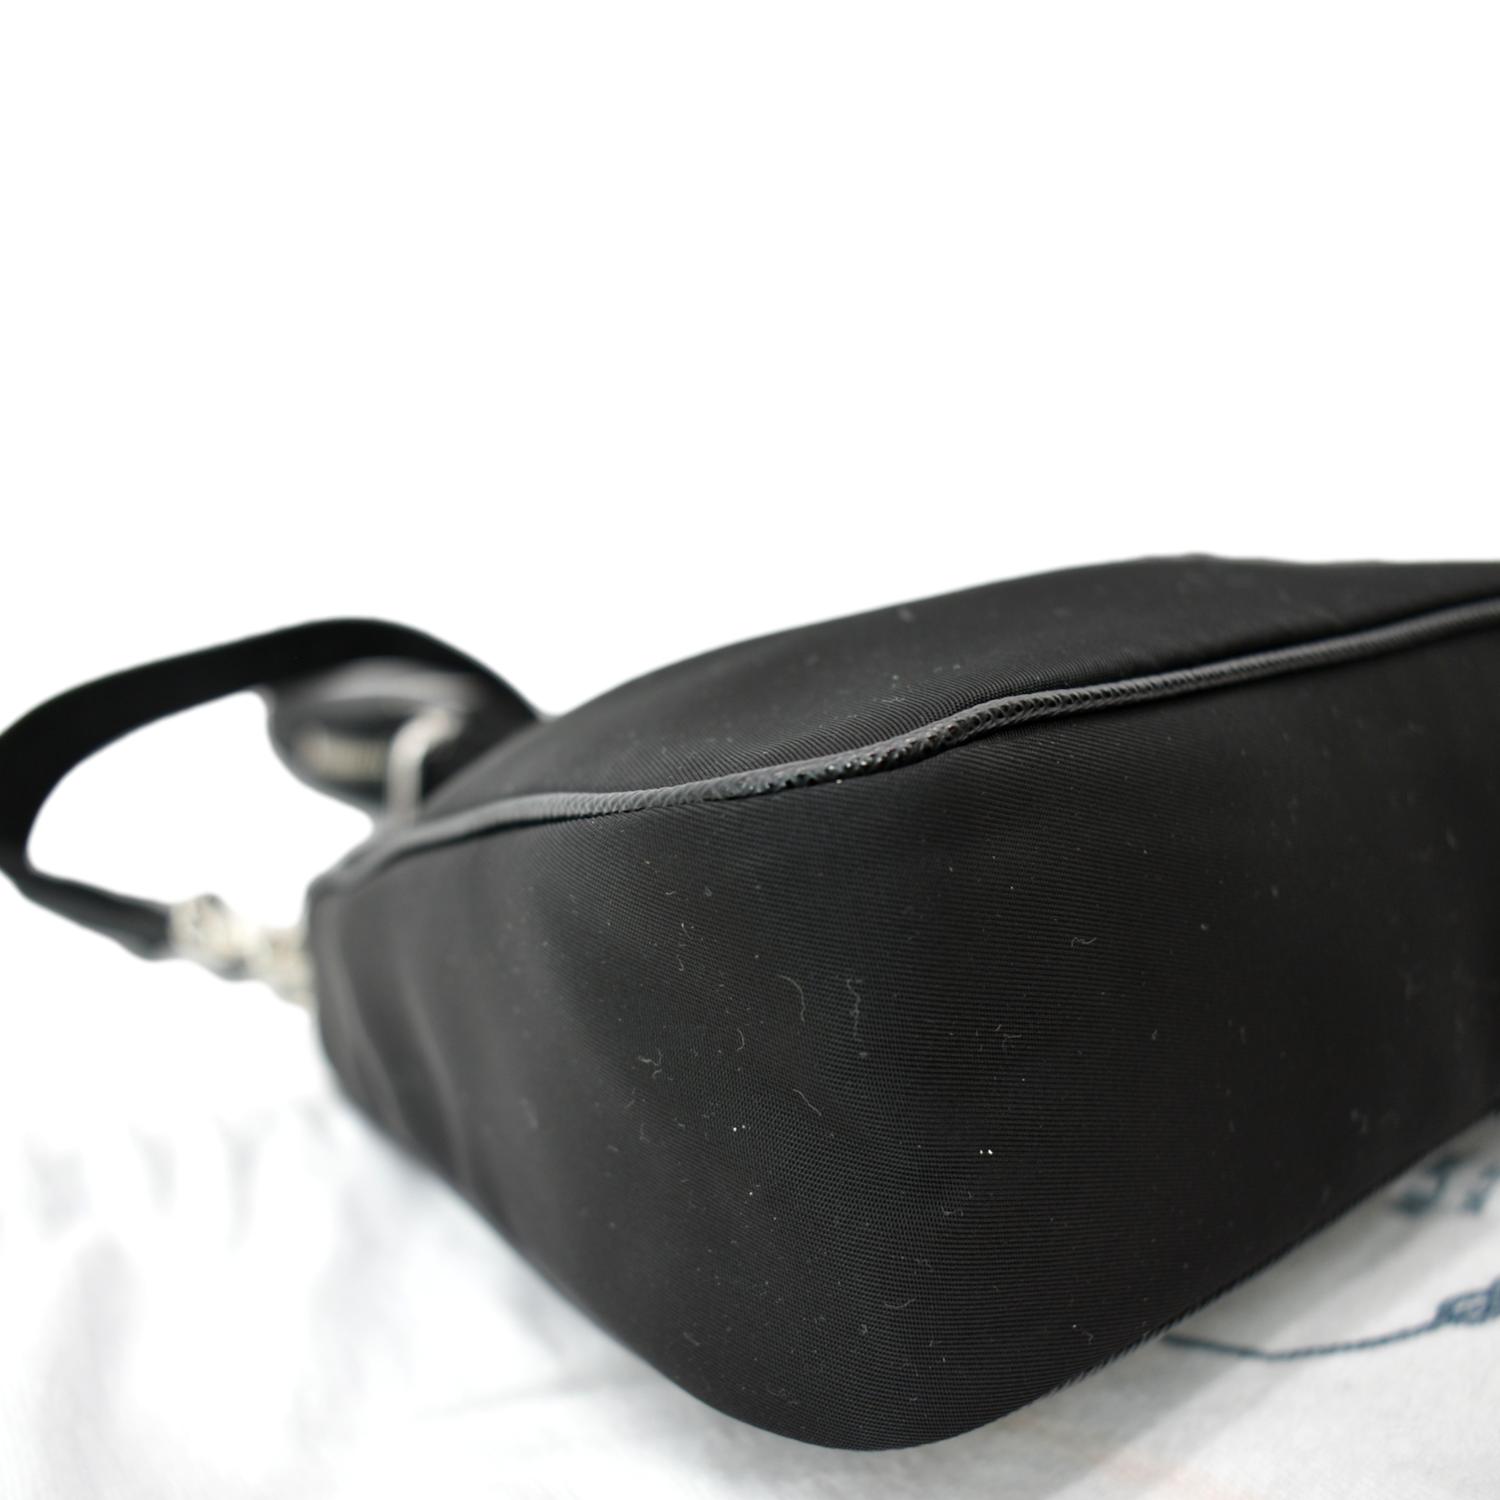 PRADA Nylon Re-Edition 2005 Shoulder Bag Black 487886